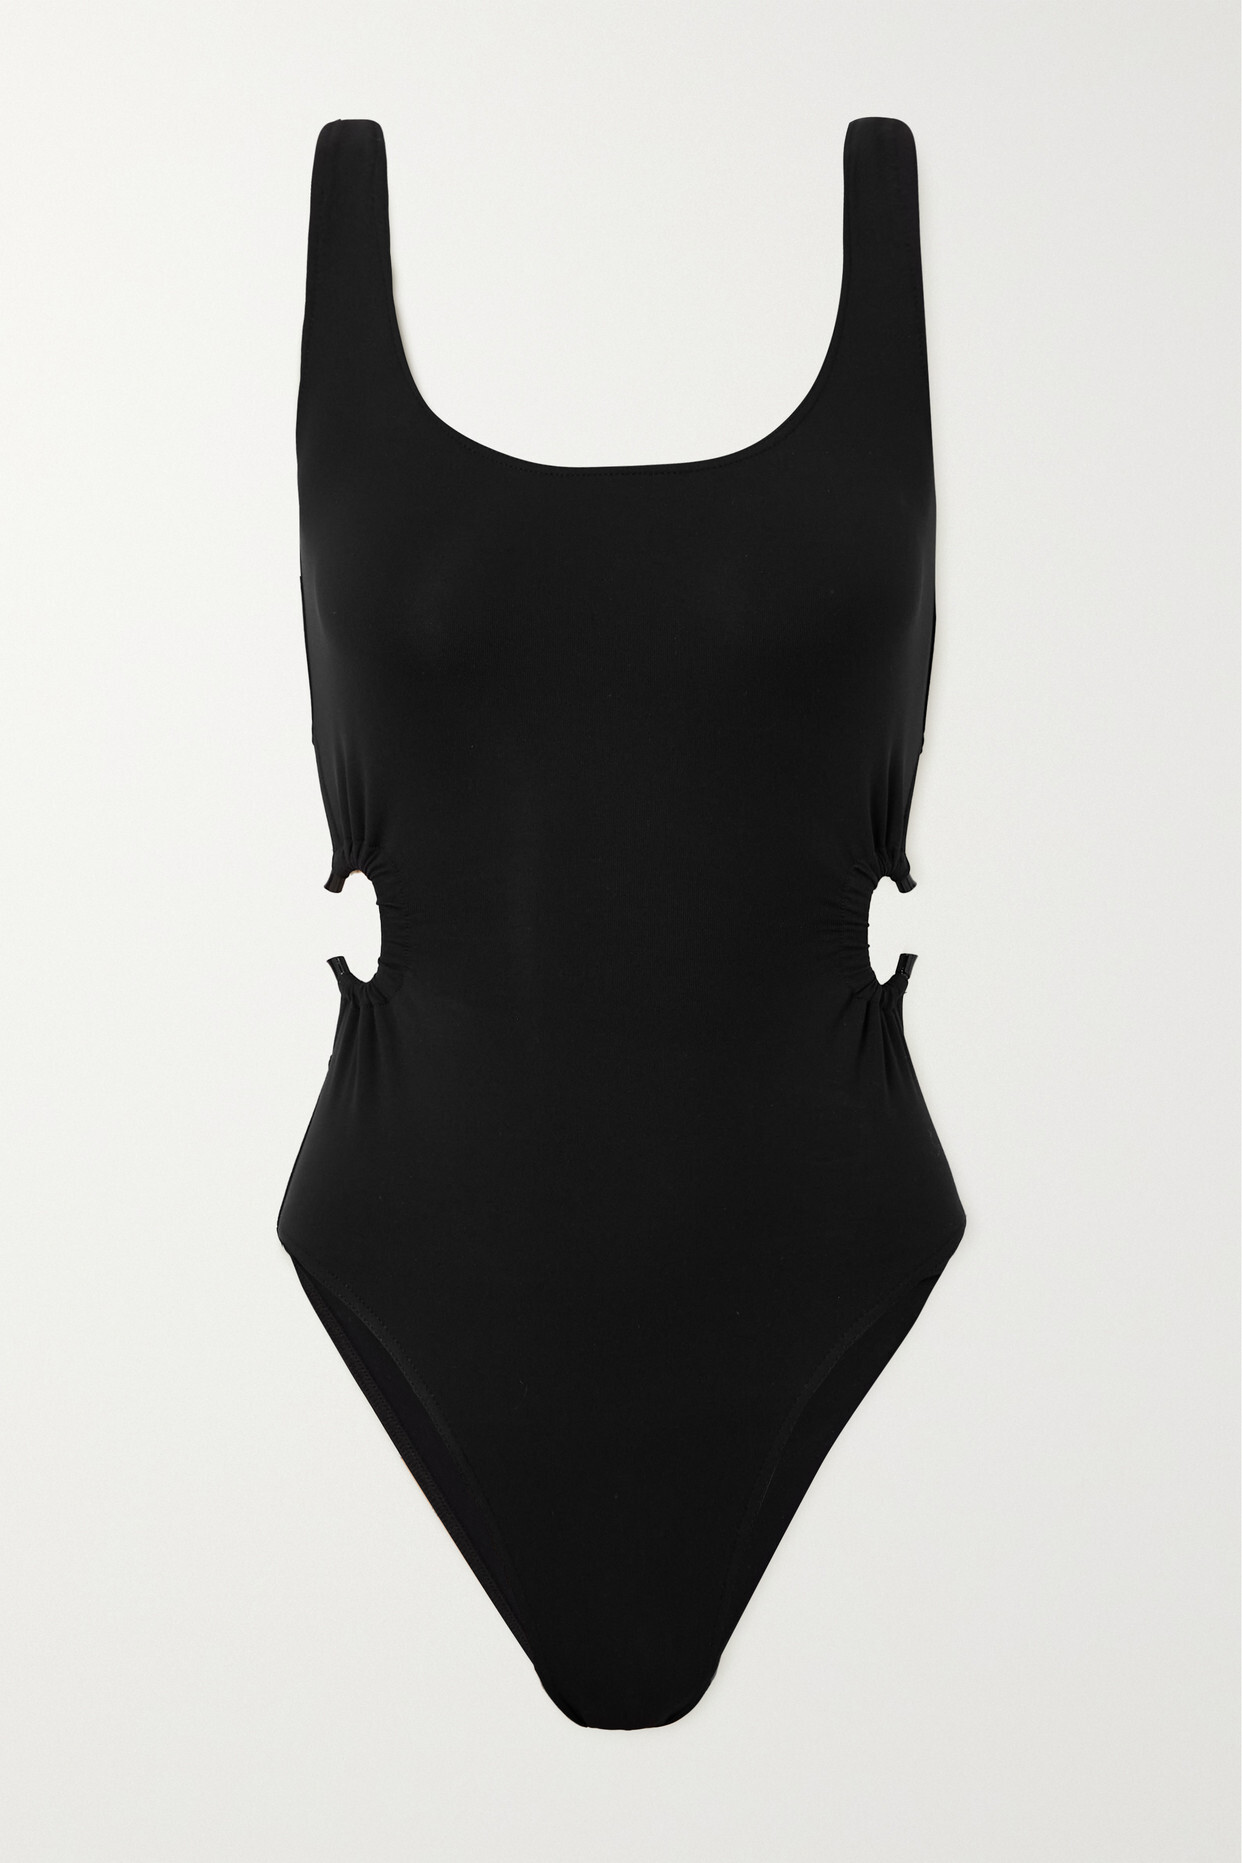 Chloé Chloé - + Eres Cutout Embellished Swimsuit - Black - Wheretoget